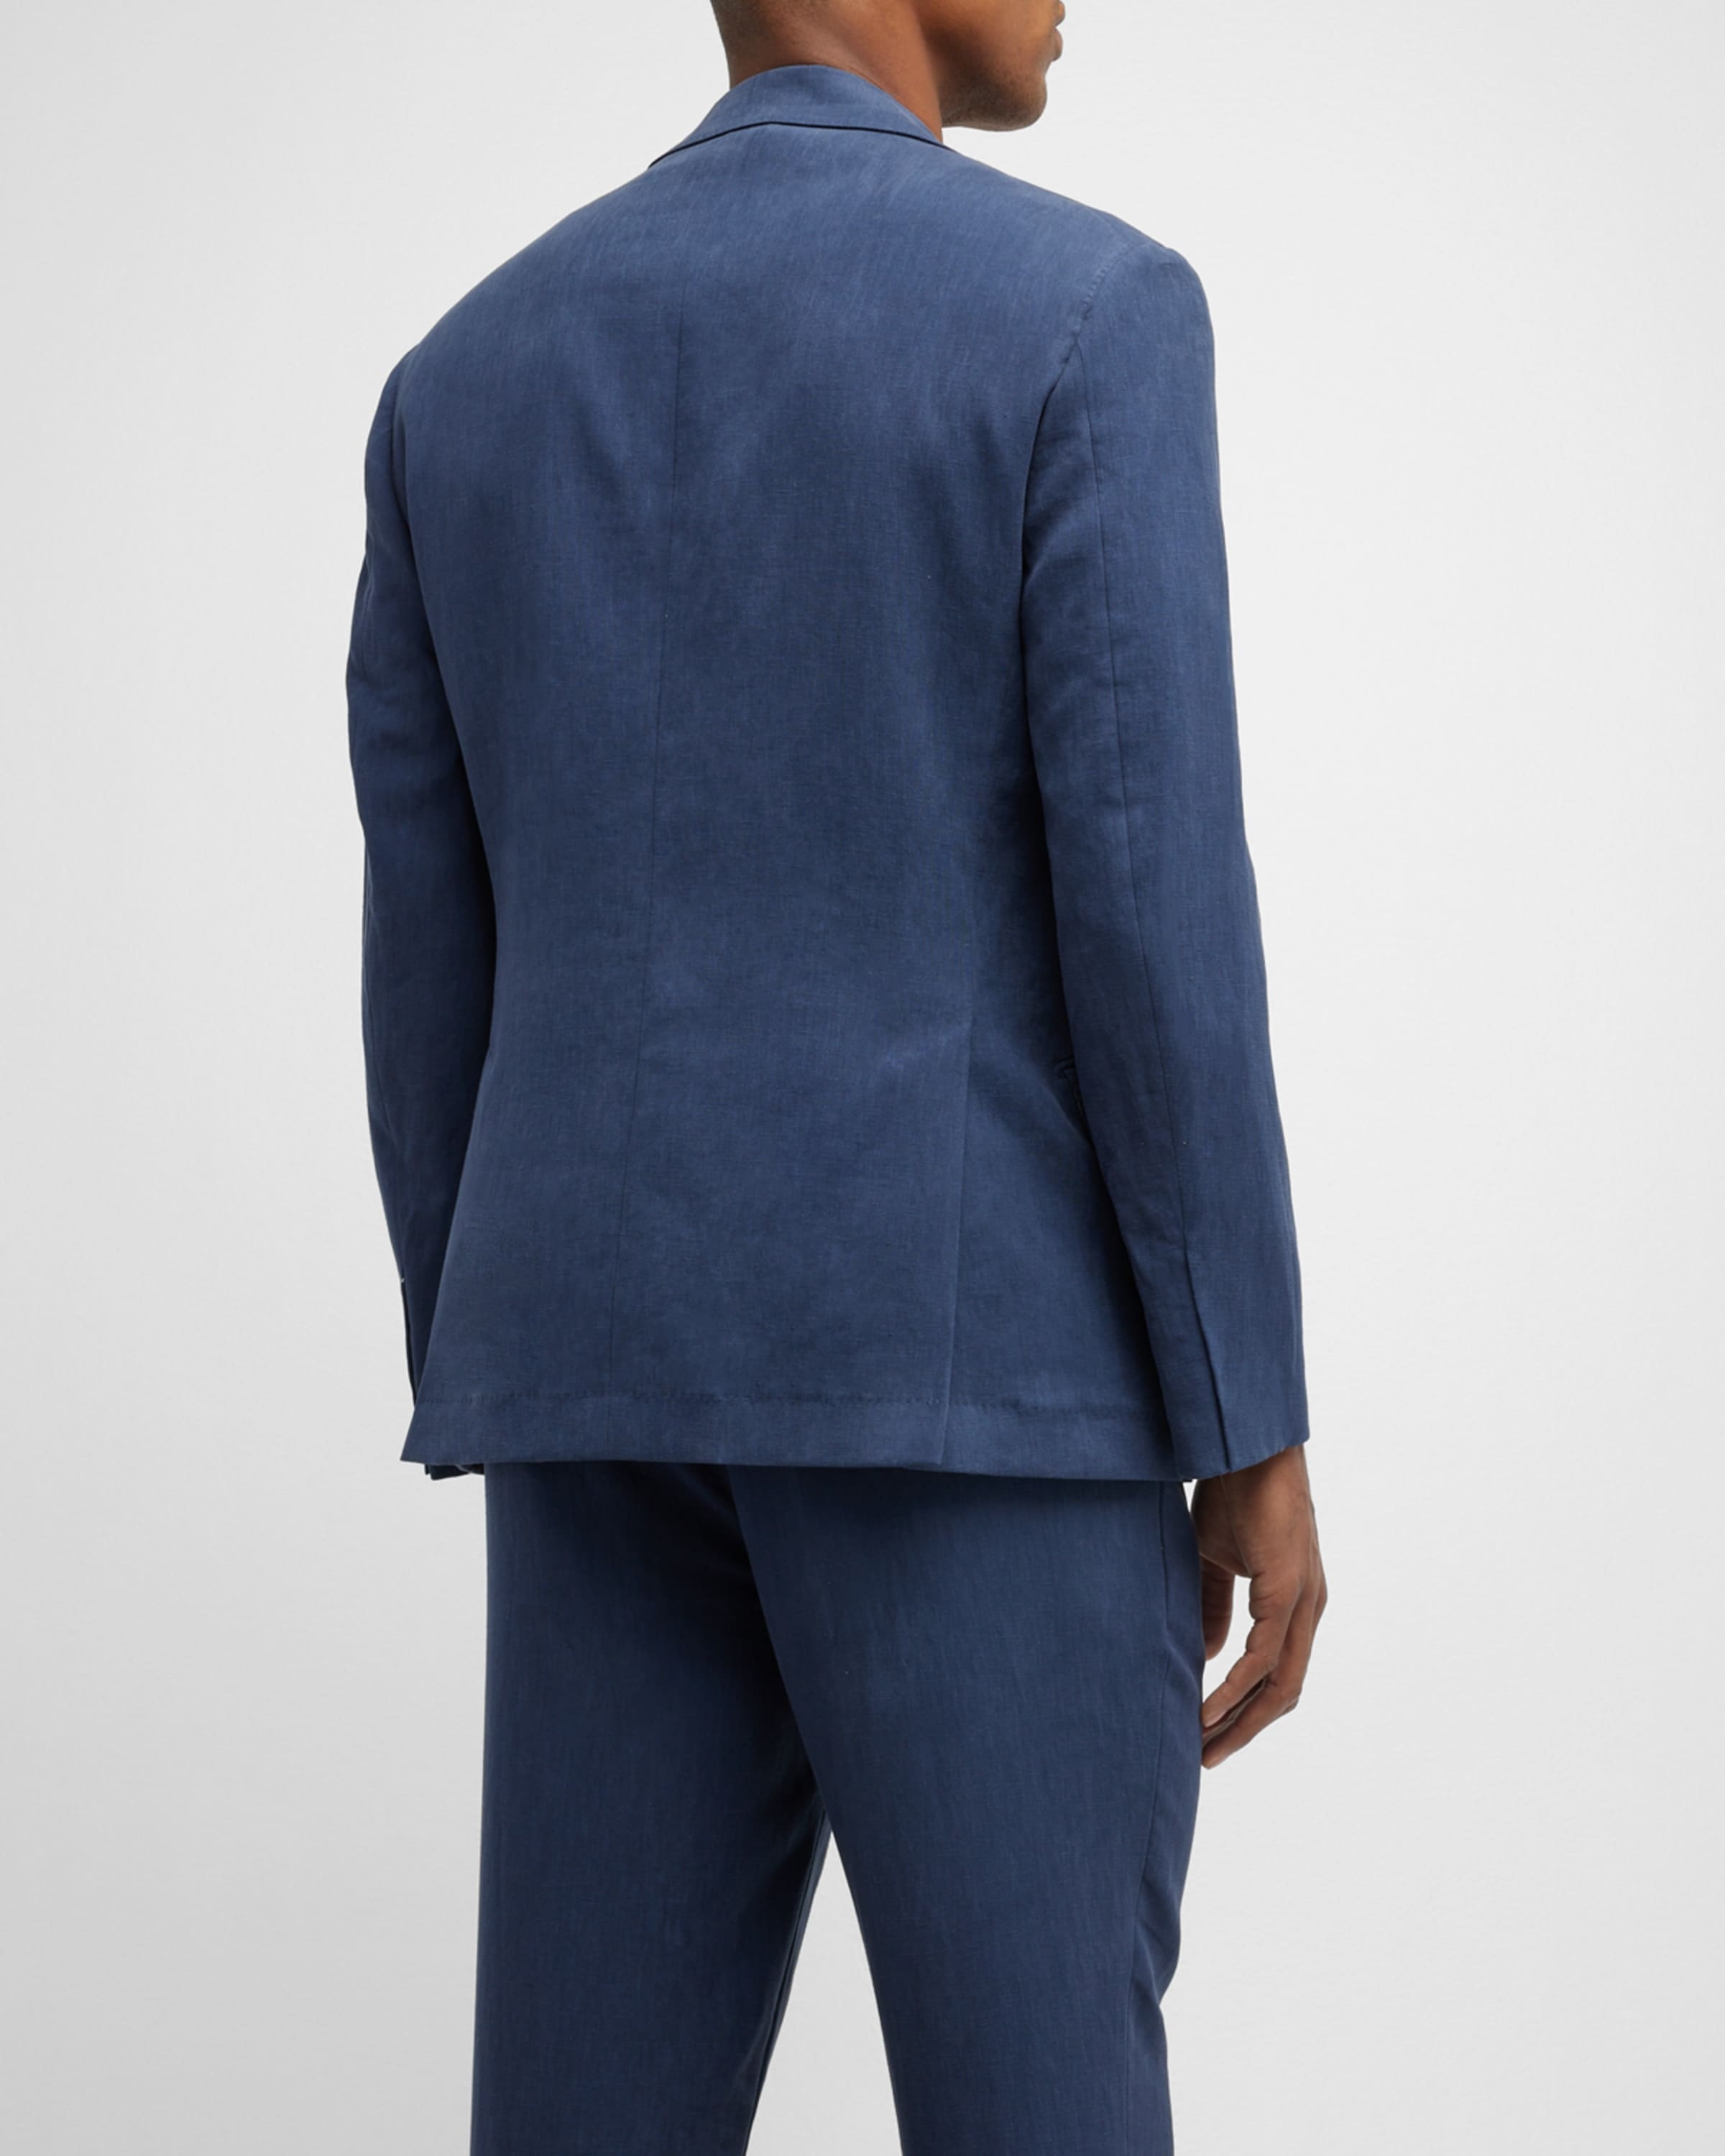 Men's Solid Linen Suit - 5